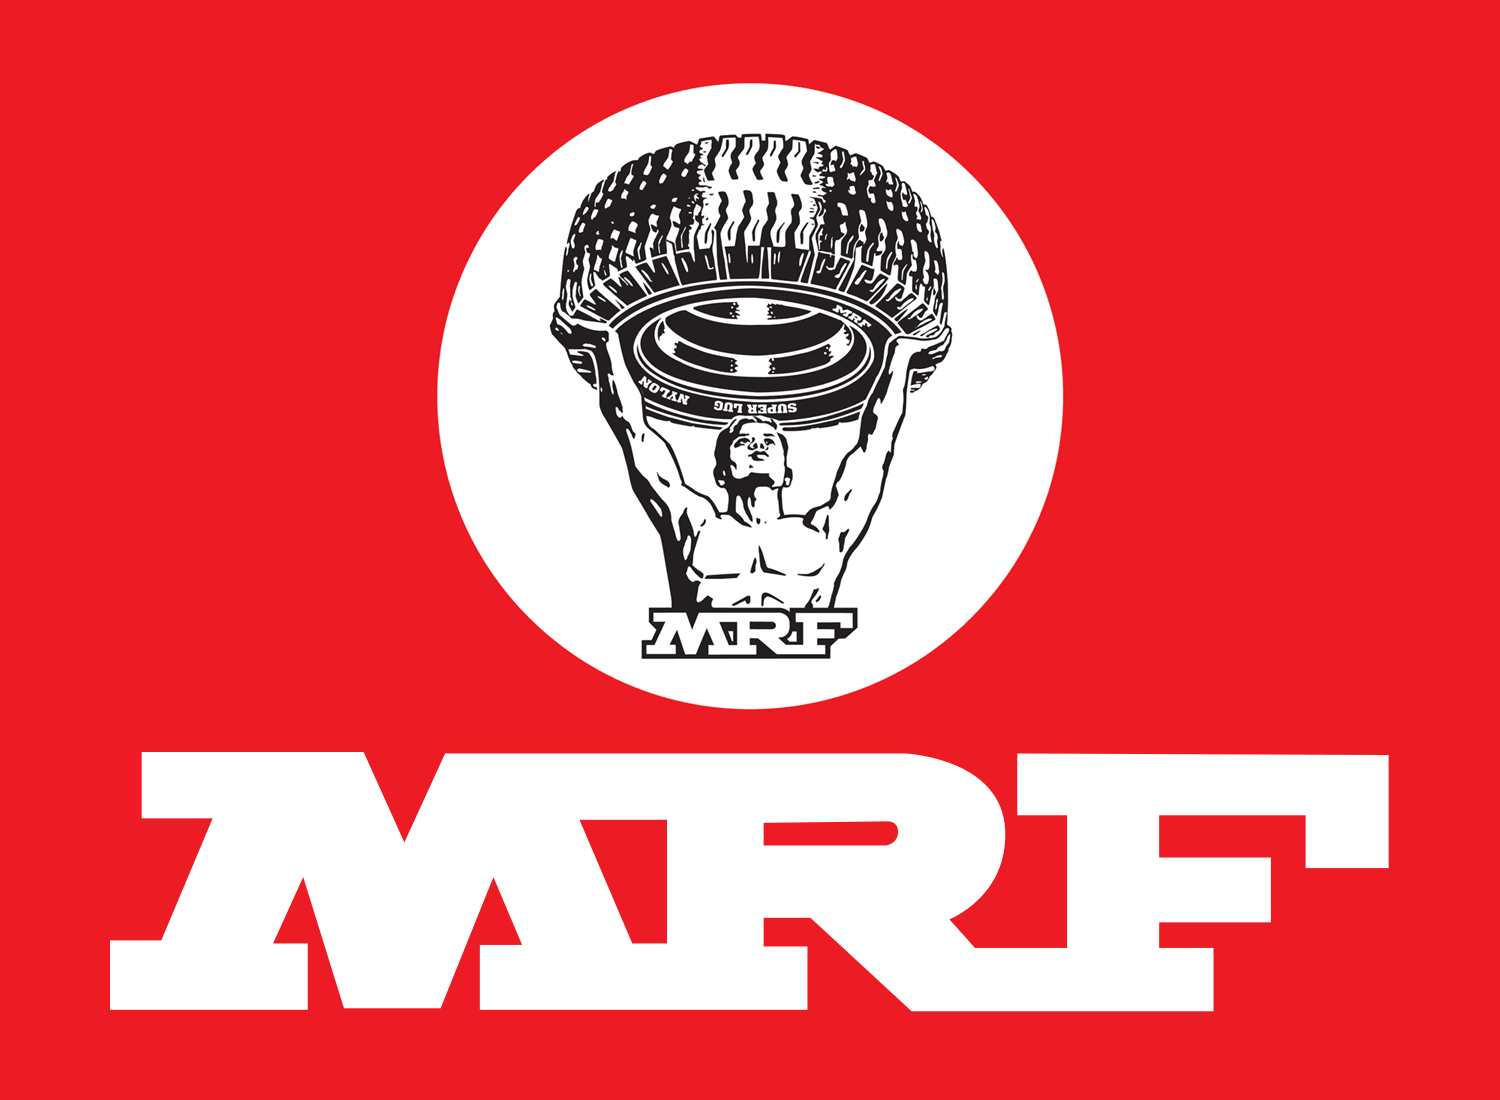 mrf: mrf q4 net profit falls 51% to inr 332.15 crore, auto news, et auto